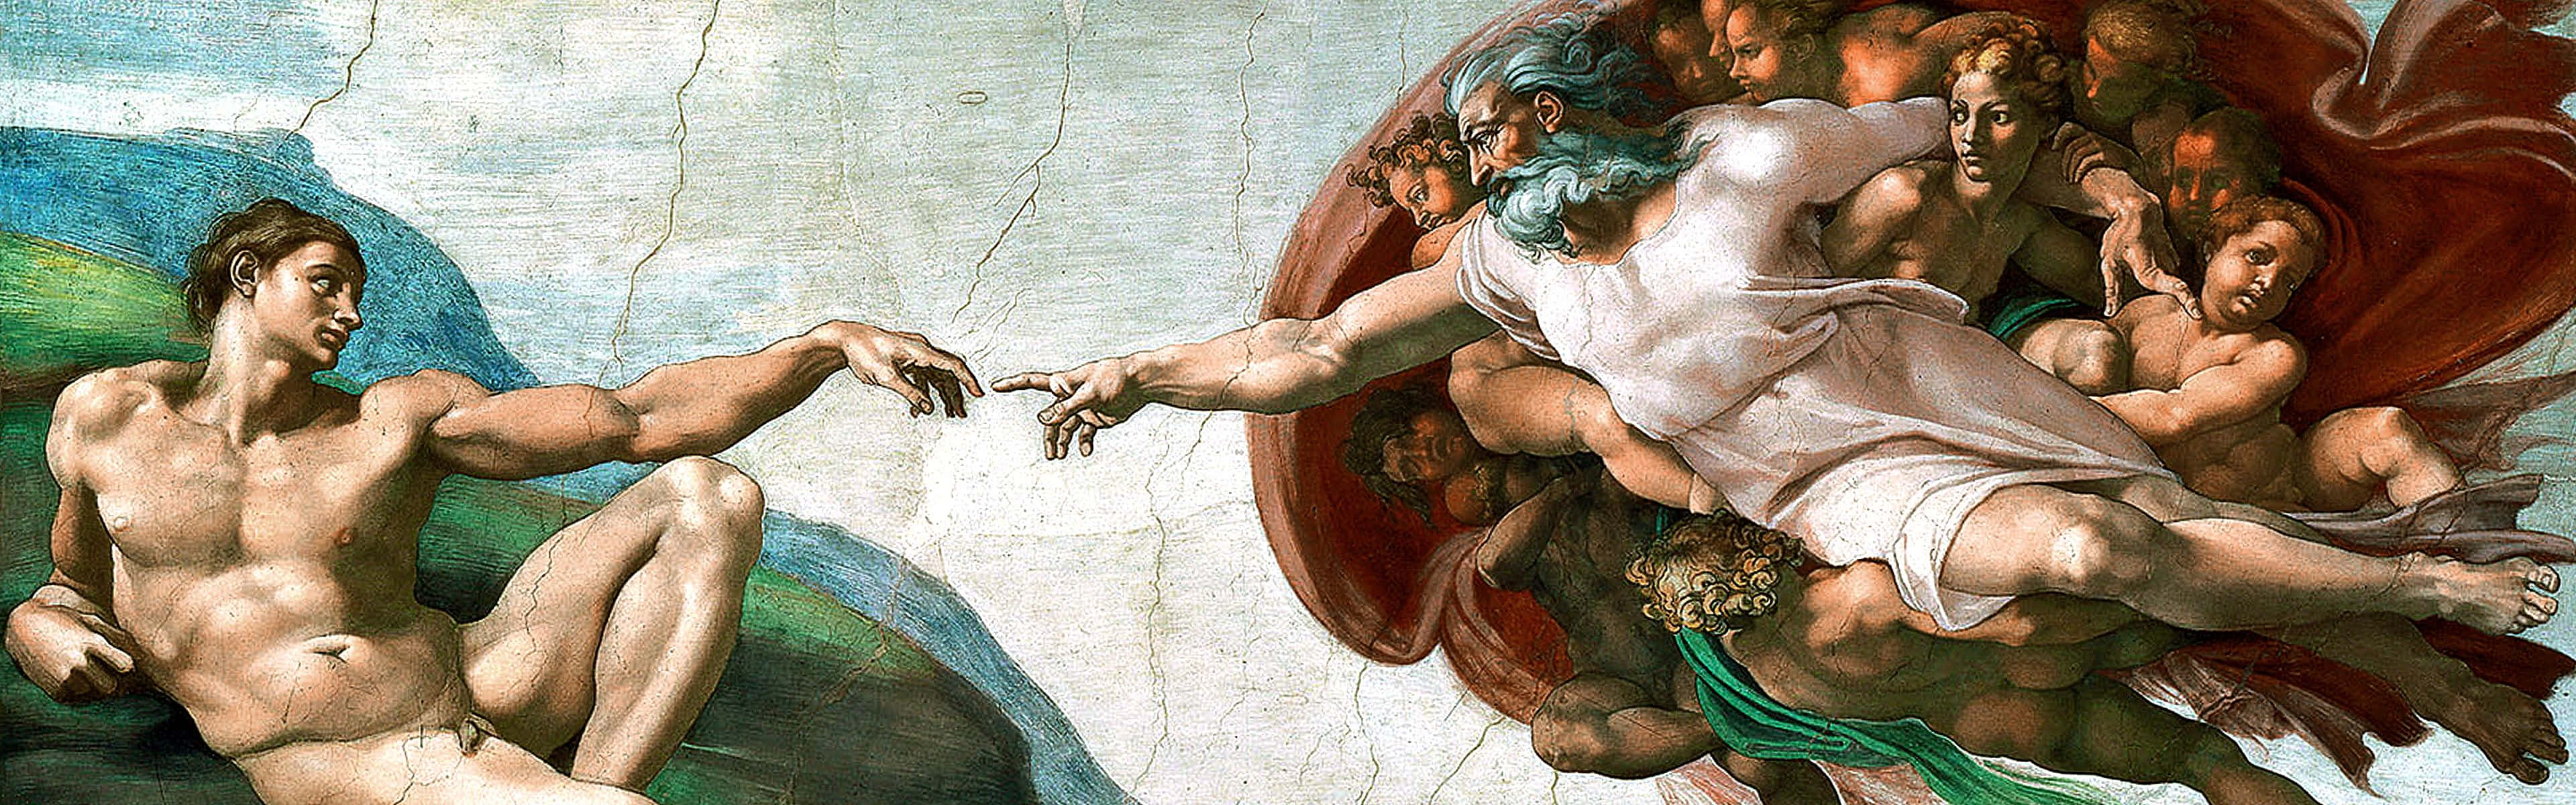 Lapintura De Michelangelo 